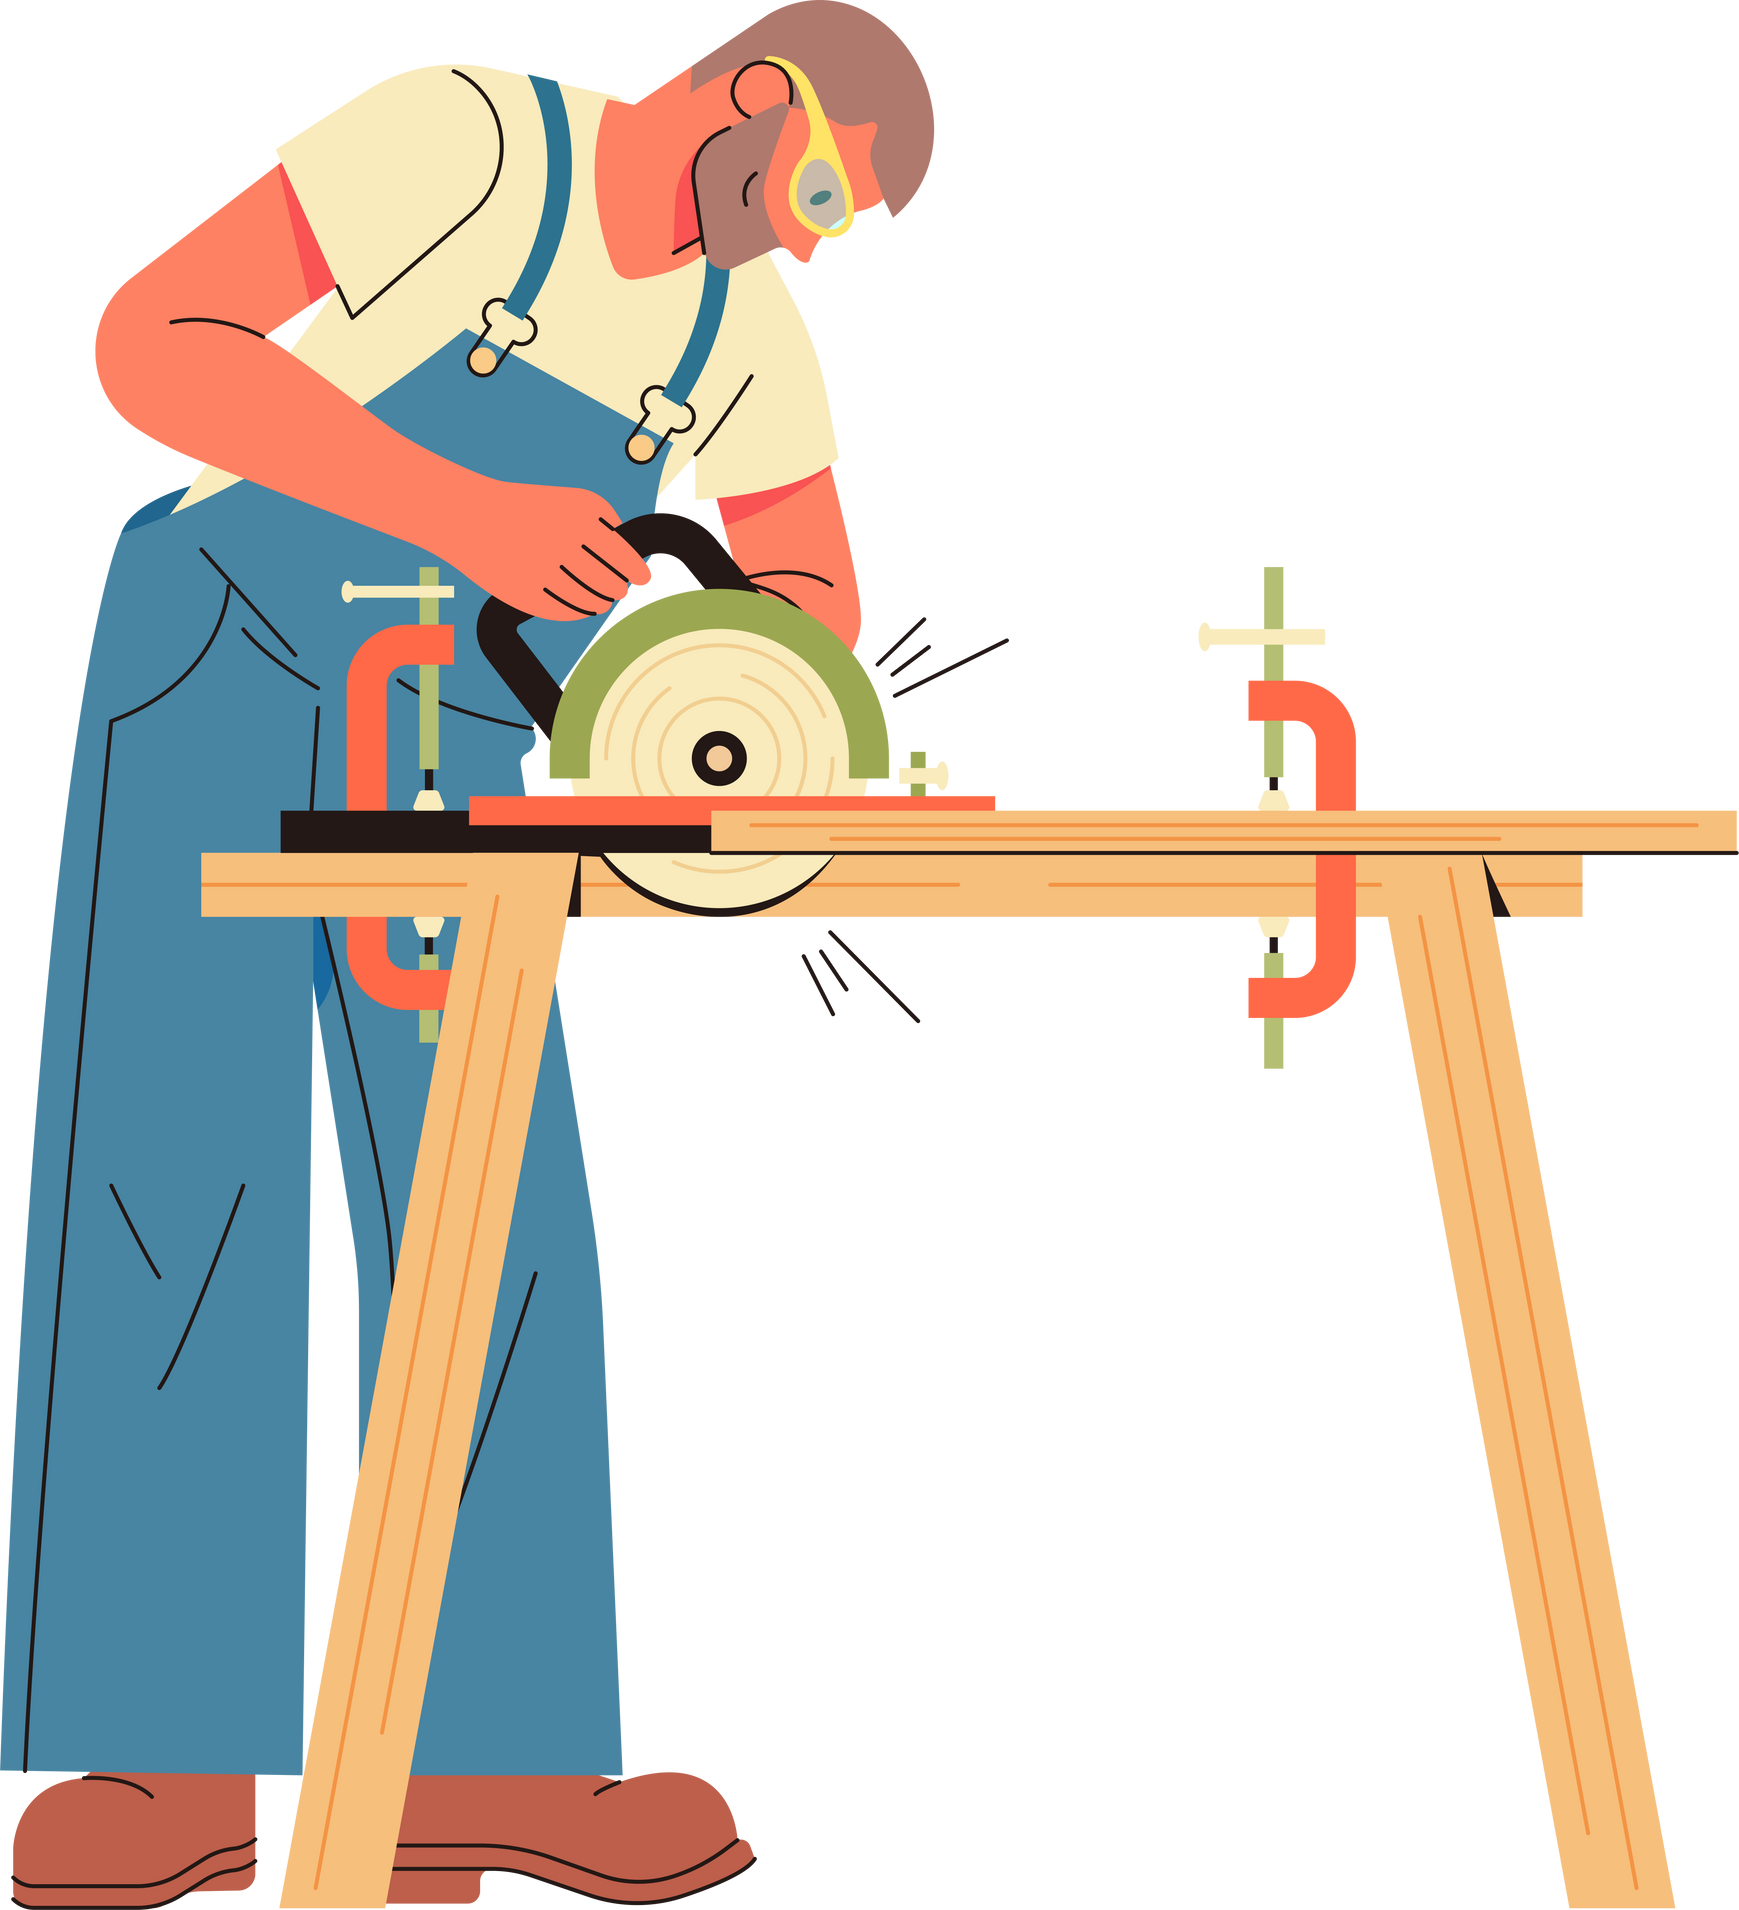 Labor Day People illustration-carpenter sawing wood